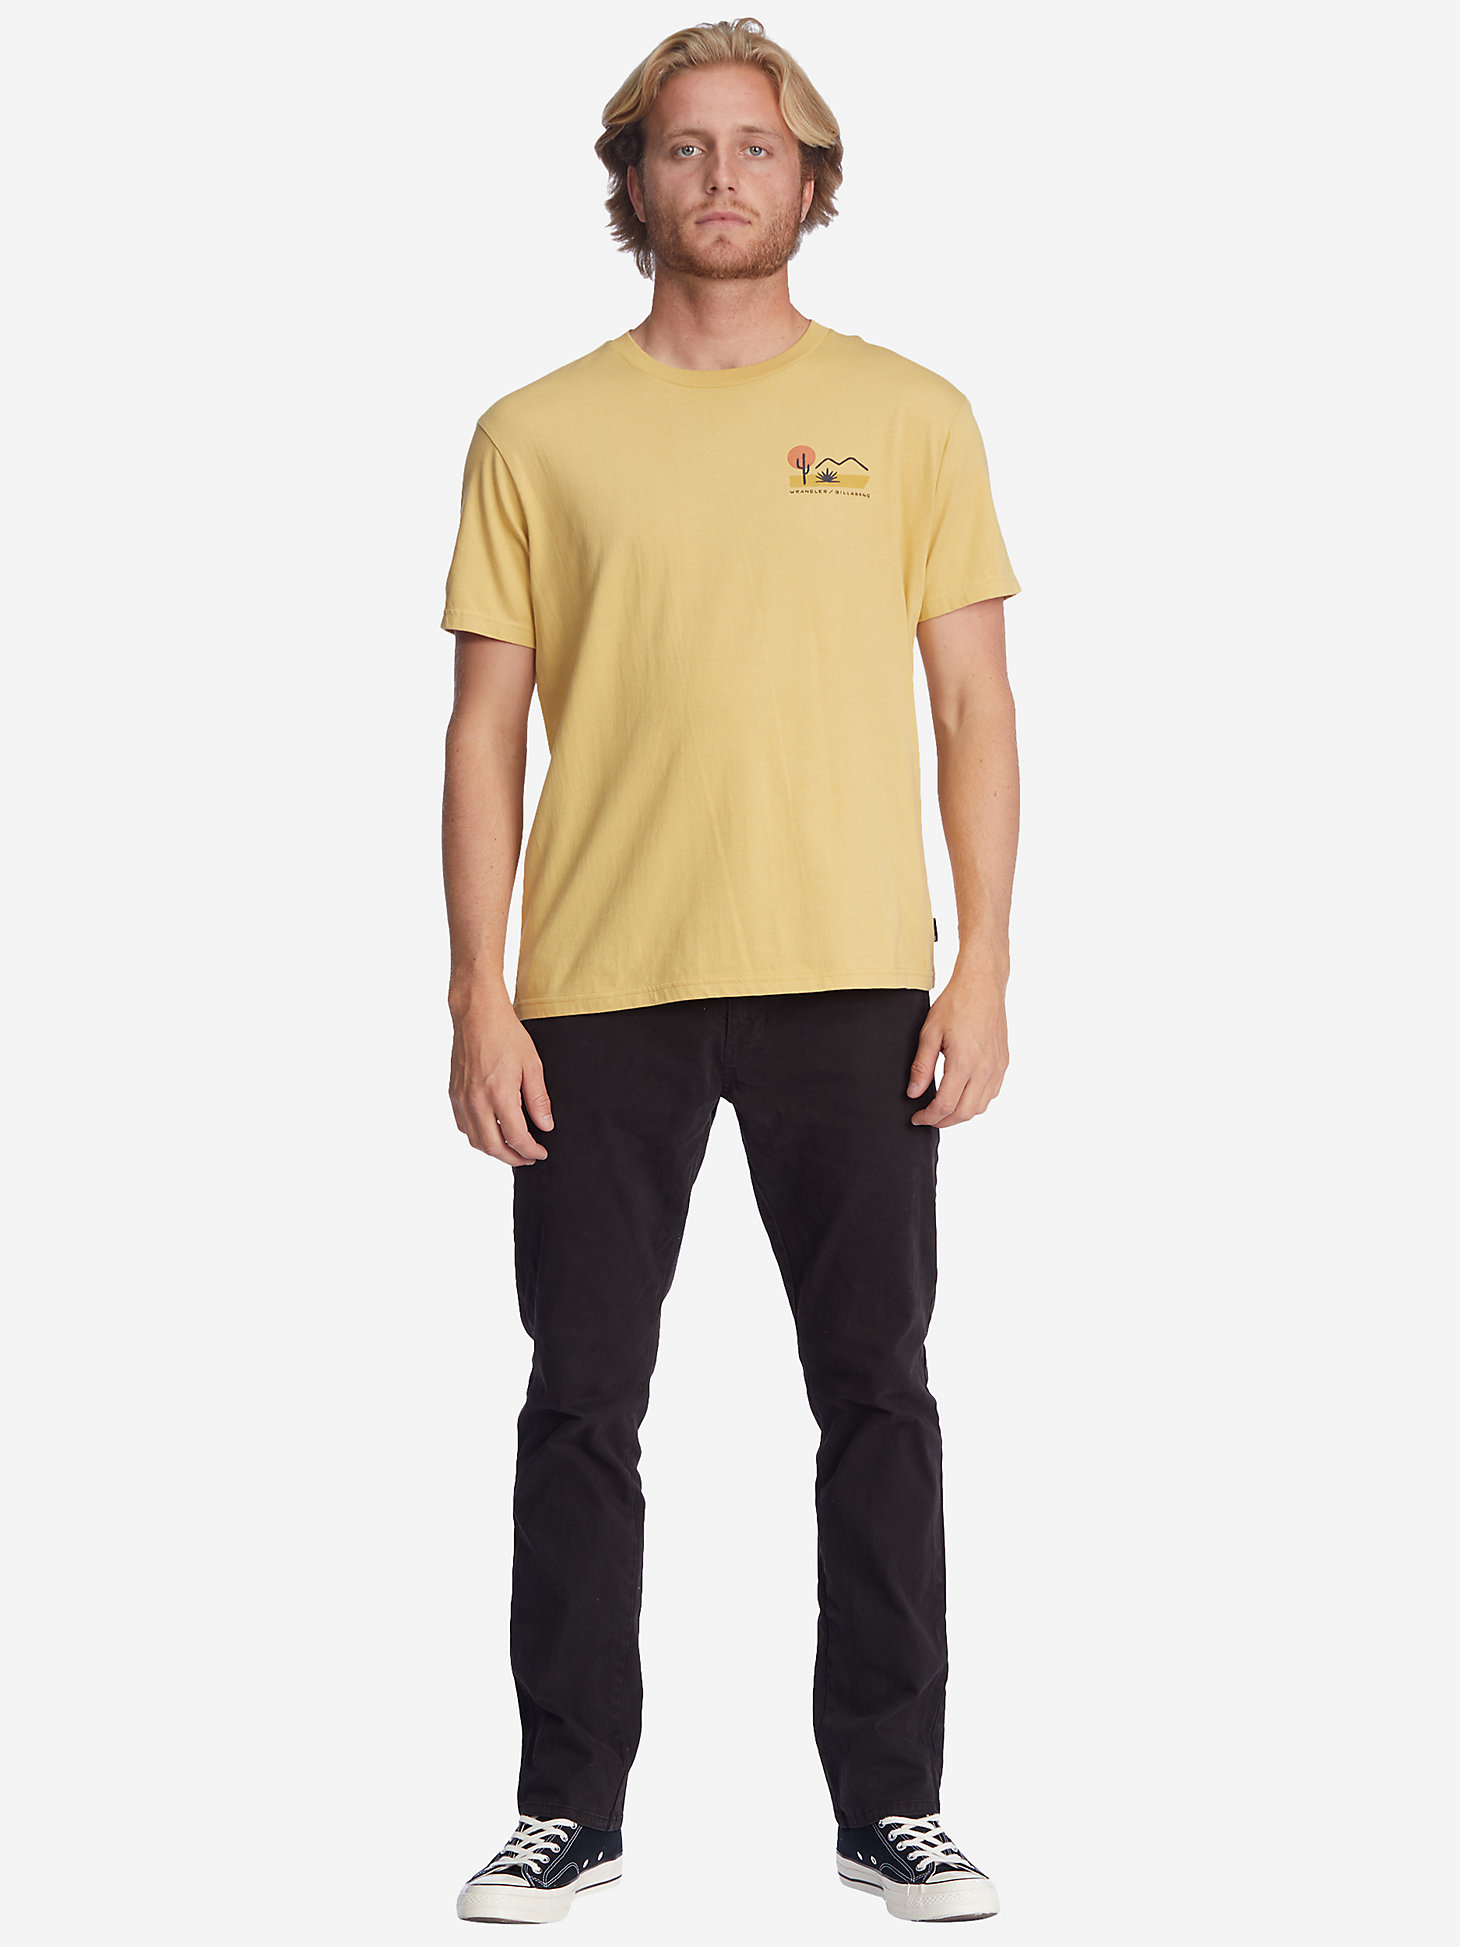 Billabong x Wrangler® Men's Rancher Horizon Graphic T-Shirt in Straw alternative view 7